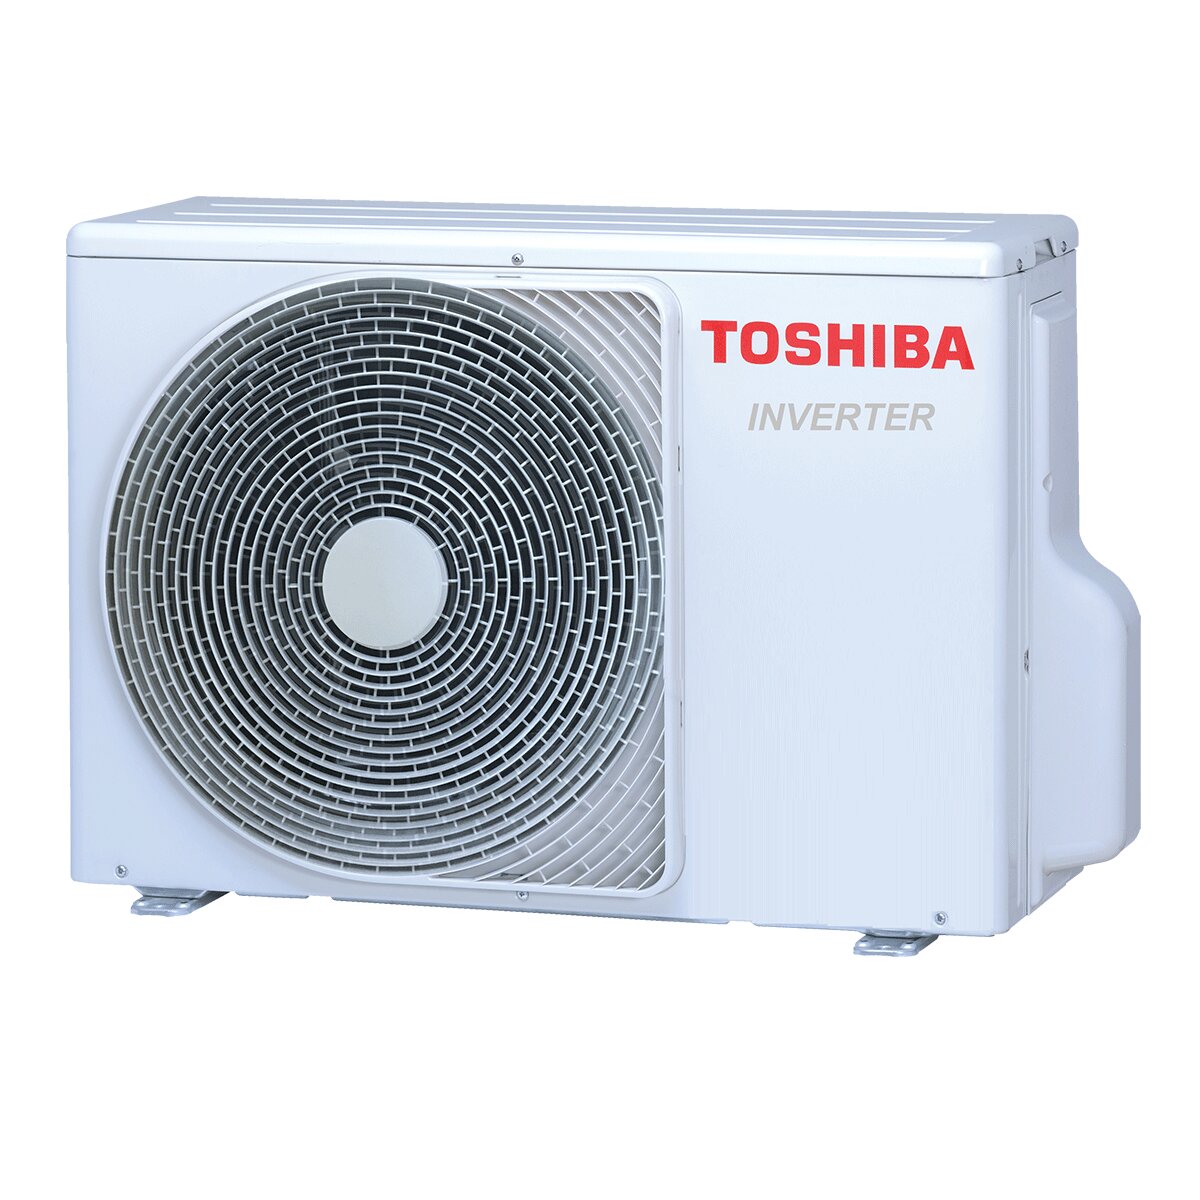 Toshiba Haori 12000 btu air conditioner R32 A +++ inverter with wifi